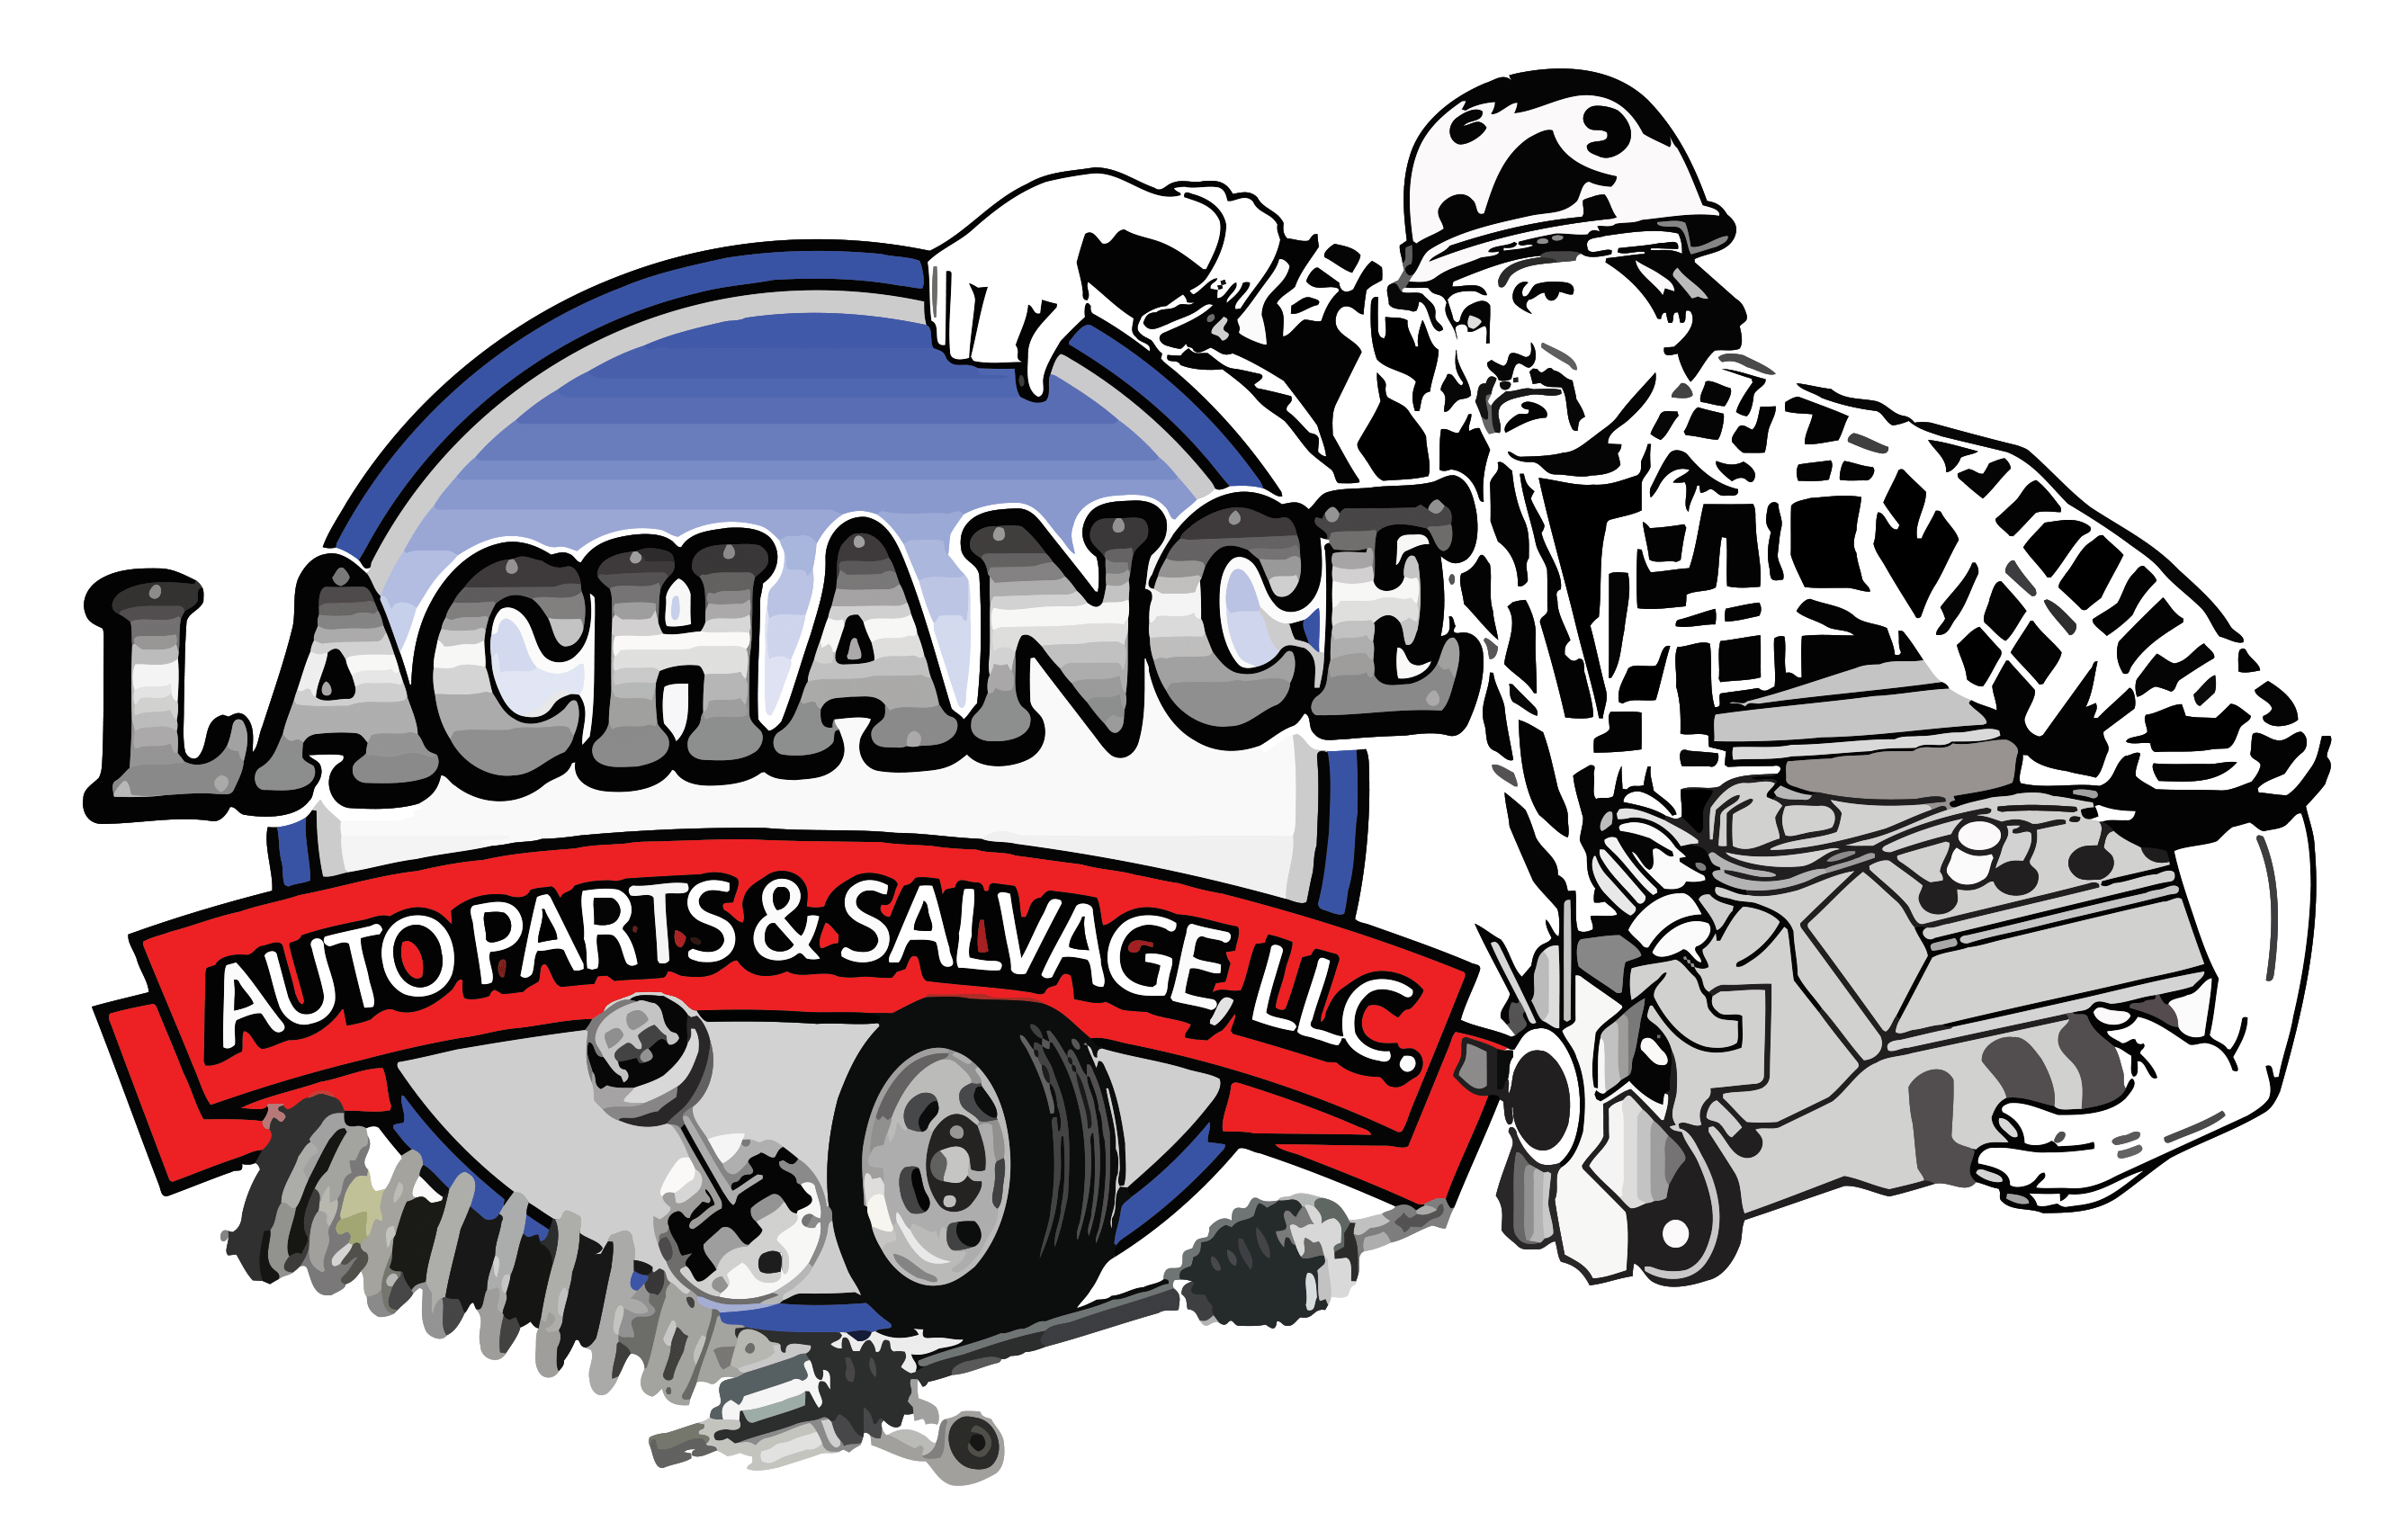 LaChance Auto Parts & Salvage LLC